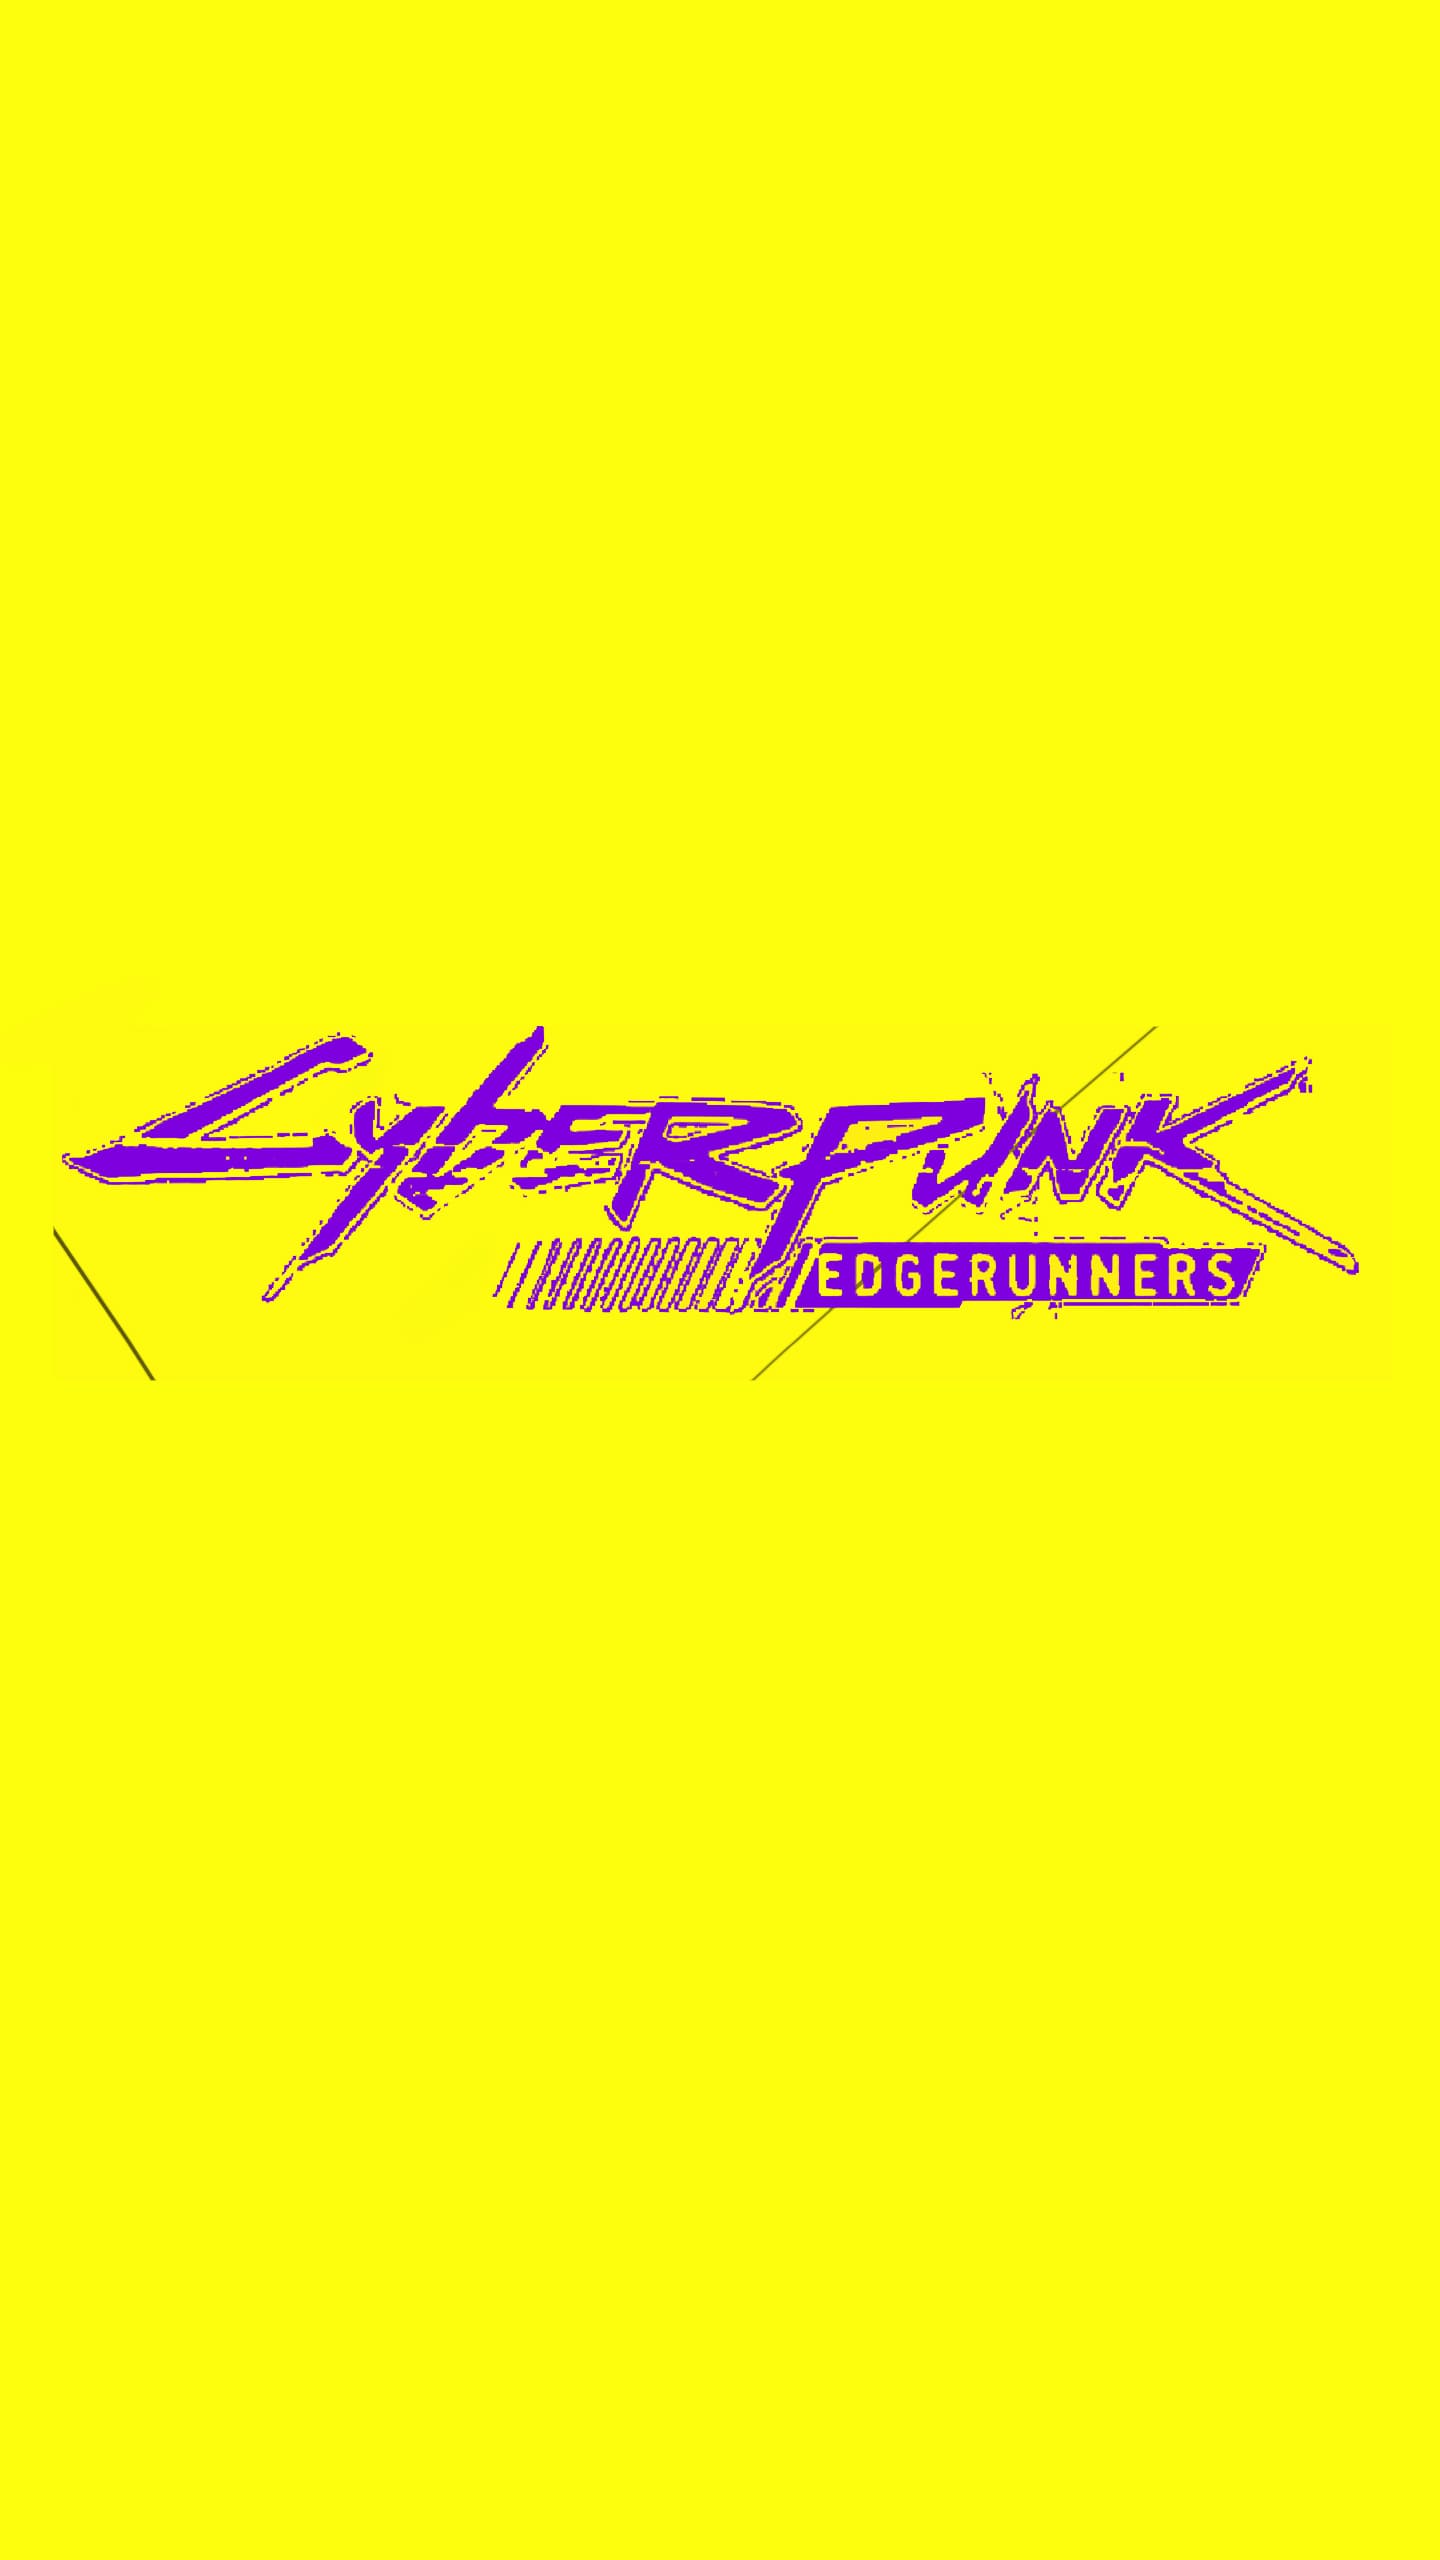 Cyberpunk Edgerunners anime theme + music mod : r/pokemmo